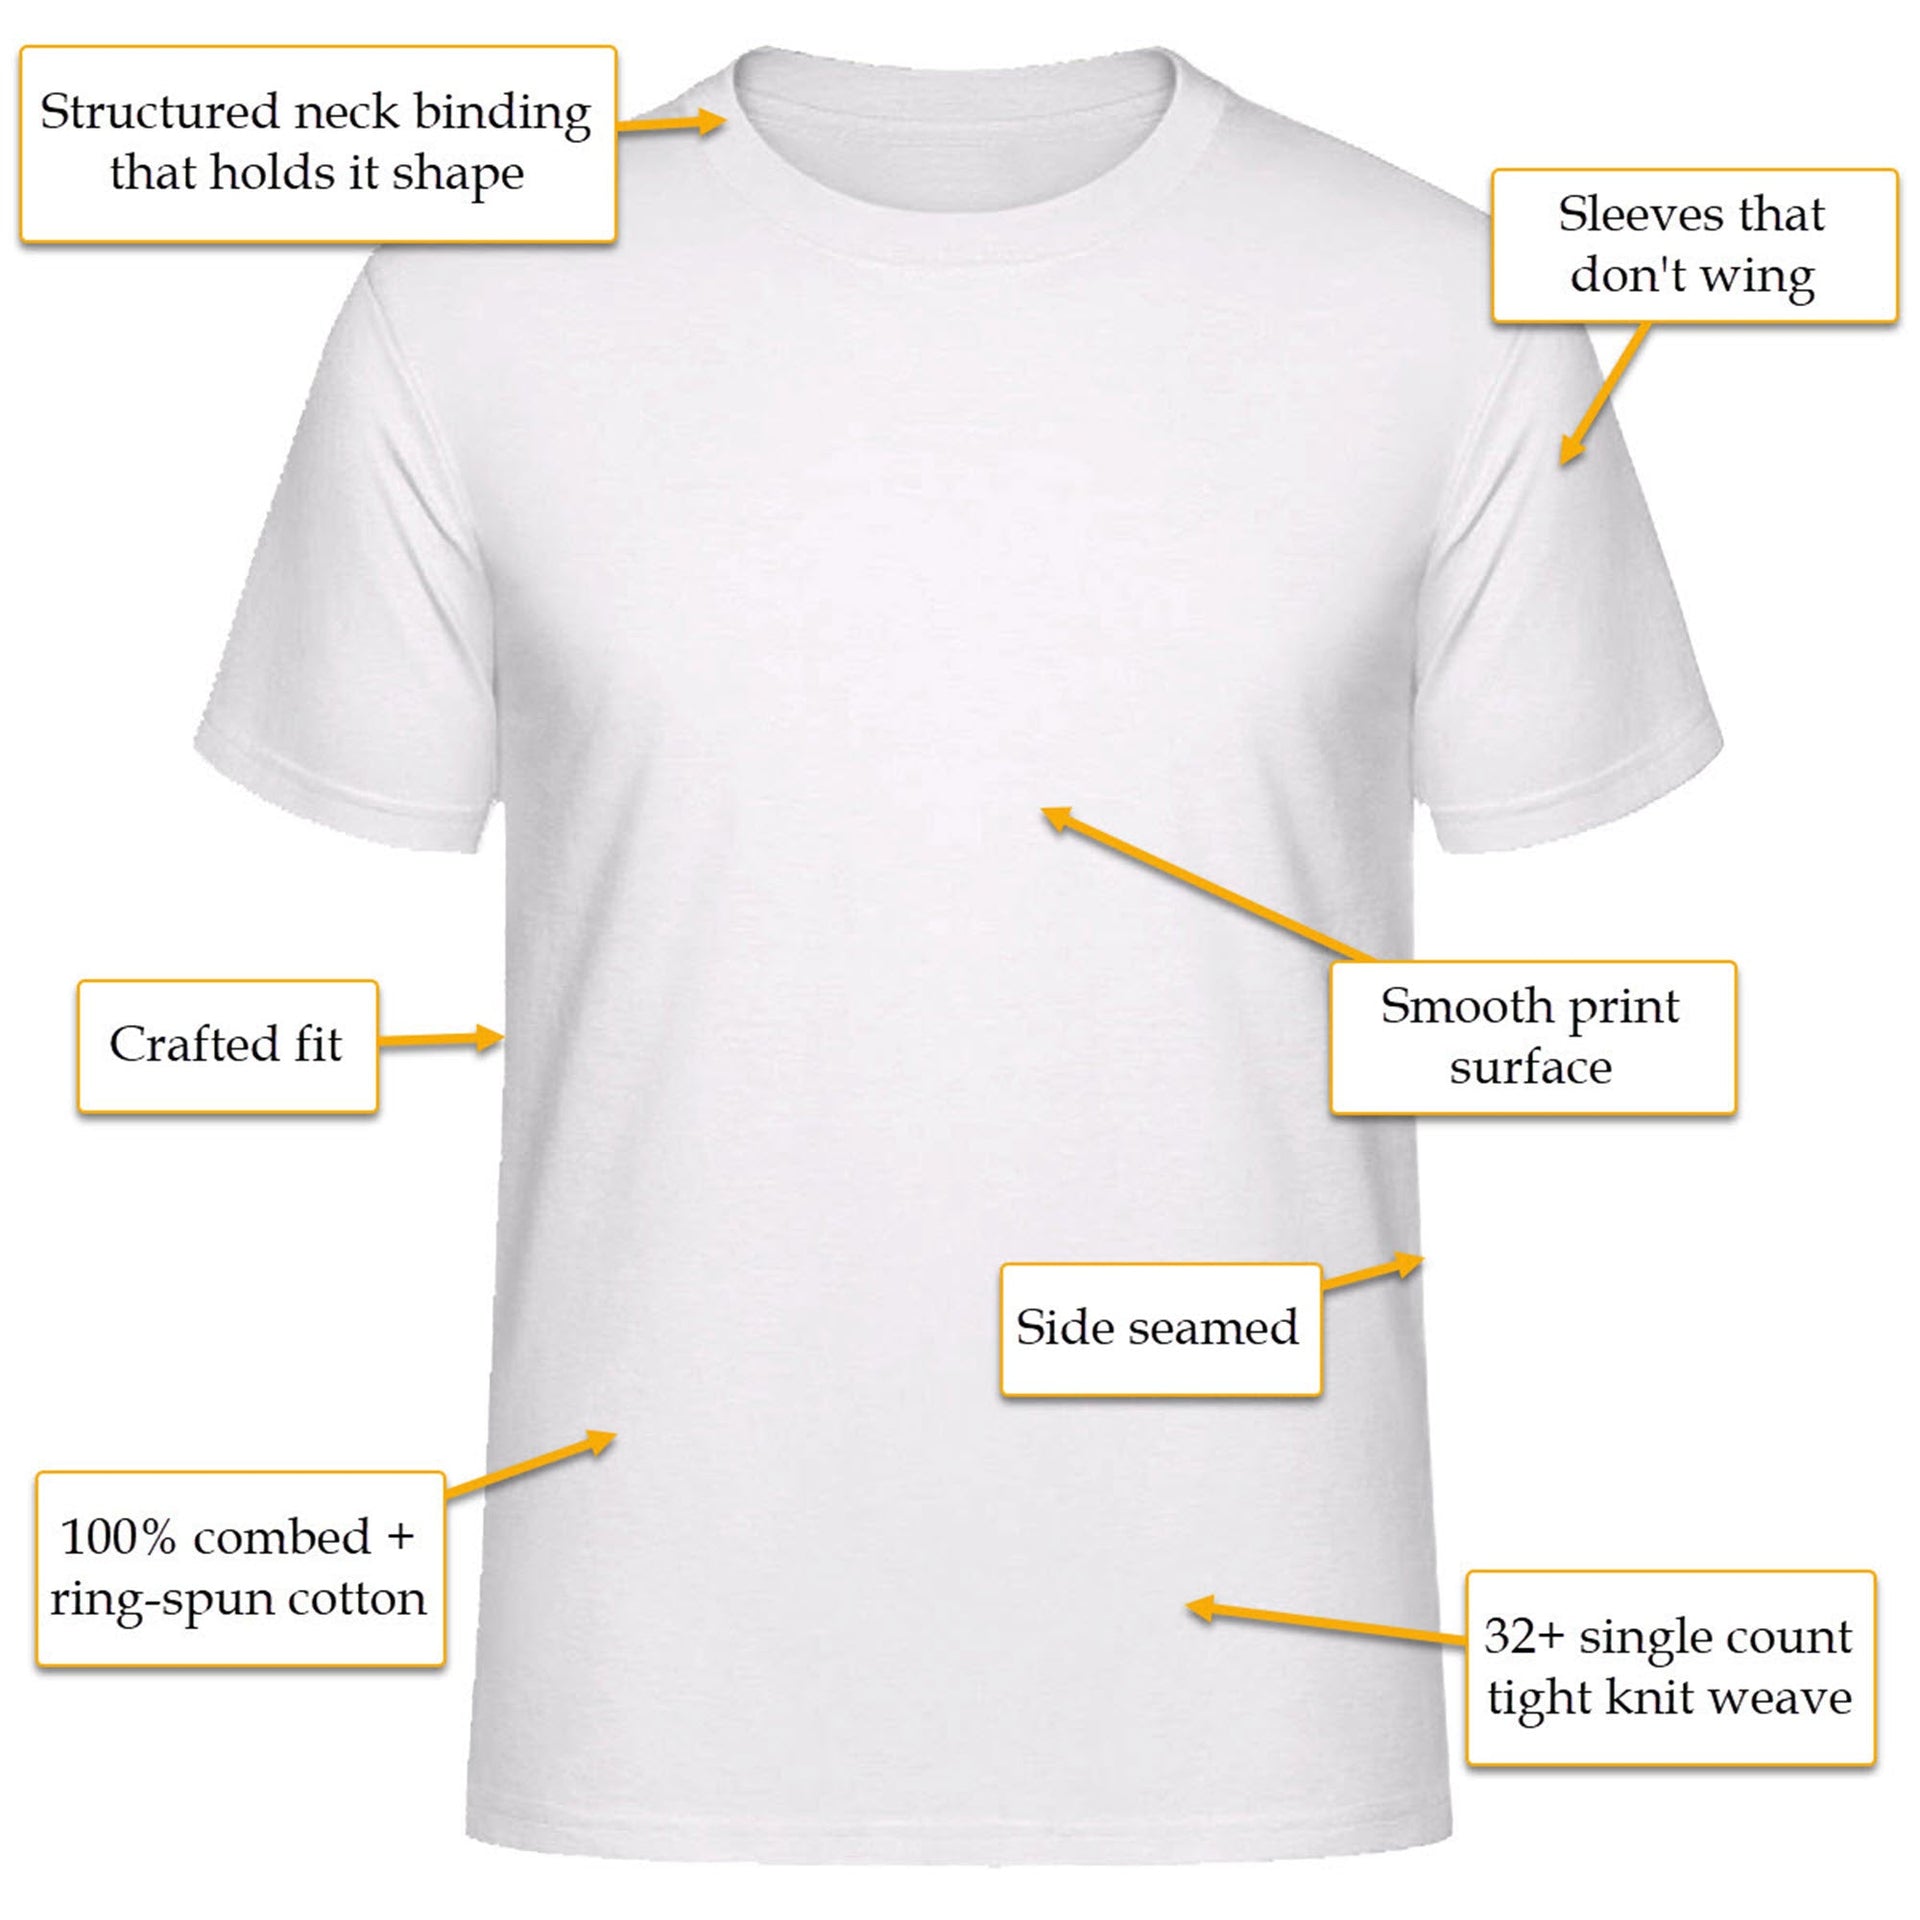 Audrey Hepburn Message to Her Critics T-shirt - Clothing - Harvey Ltd